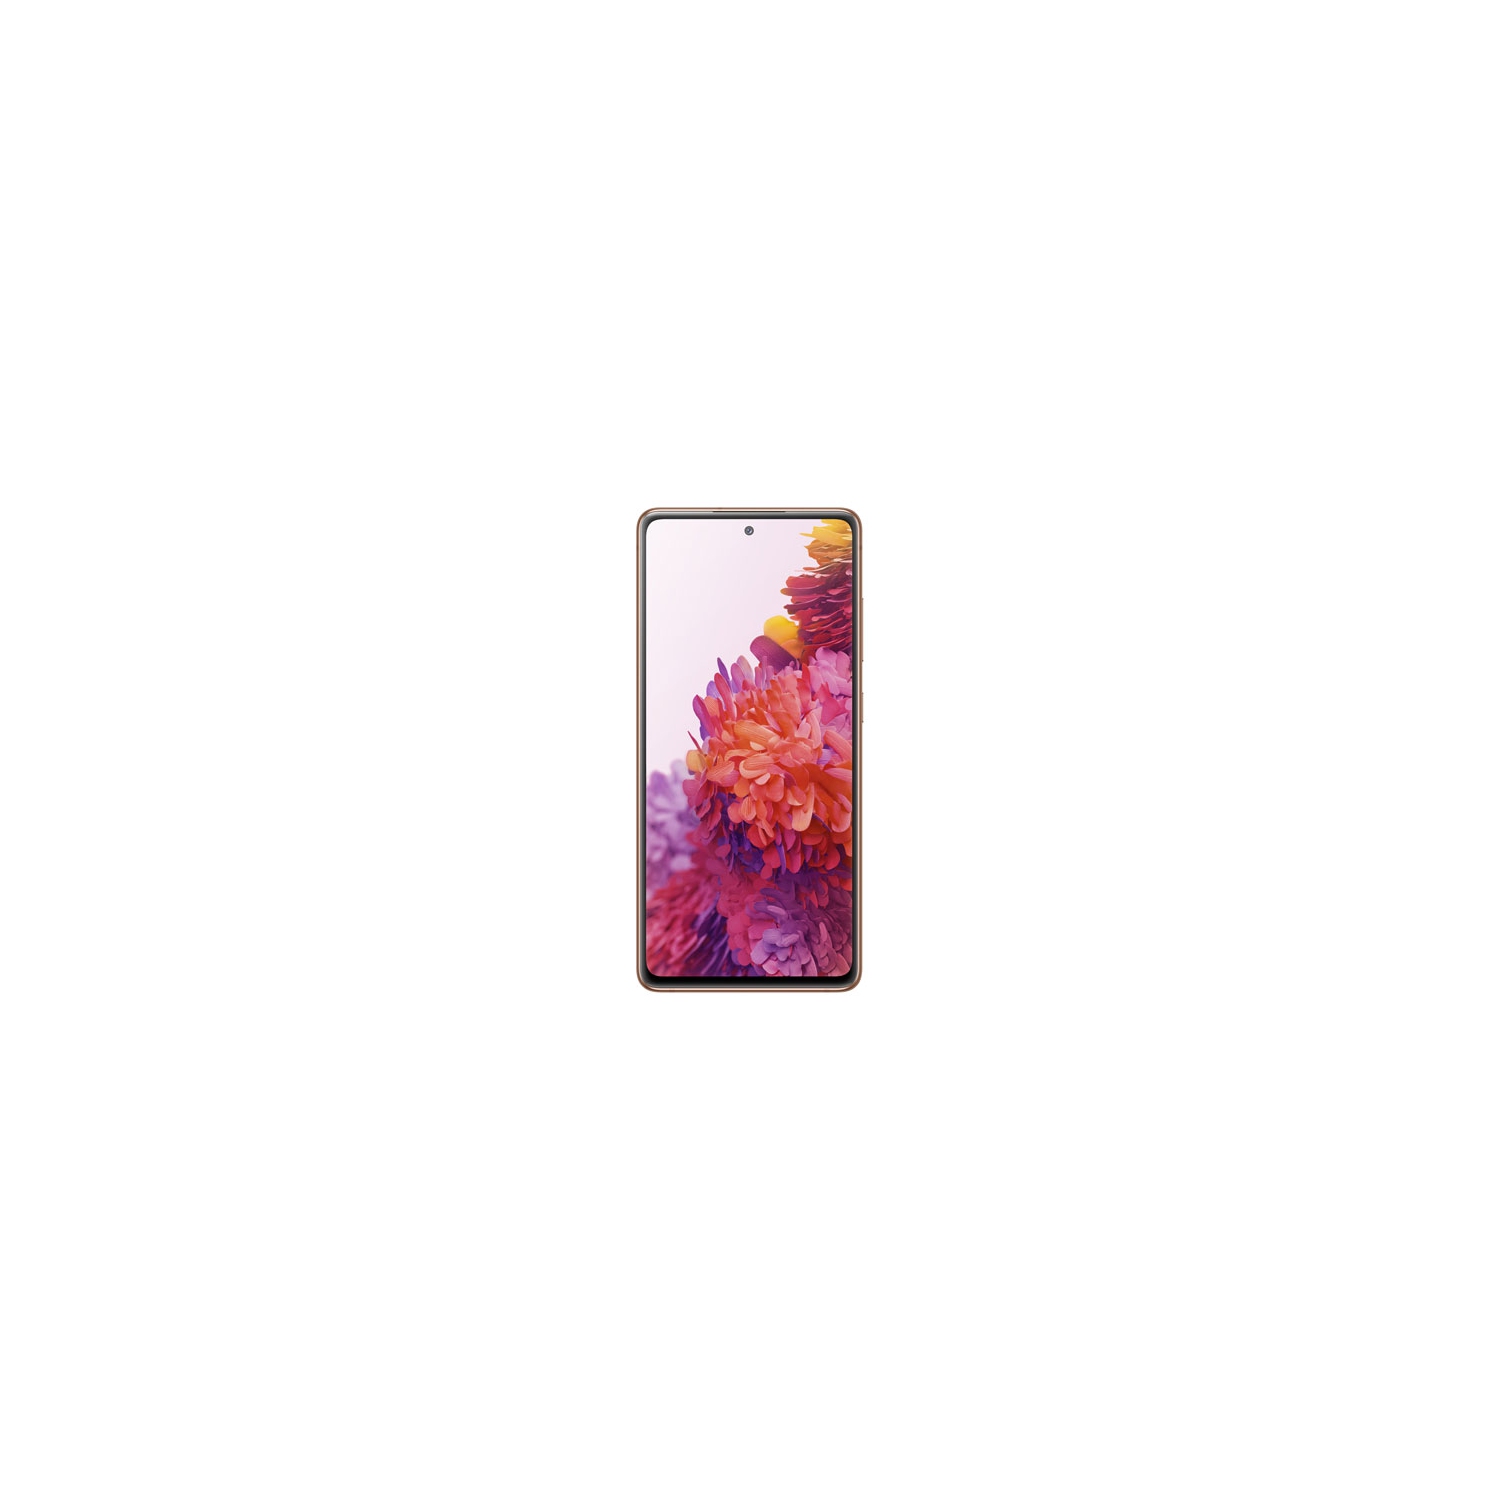 Refurbished (Good) - Samsung Galaxy S20 FE 5G 128GB Smartphone - Cloud Orange - Unlocked